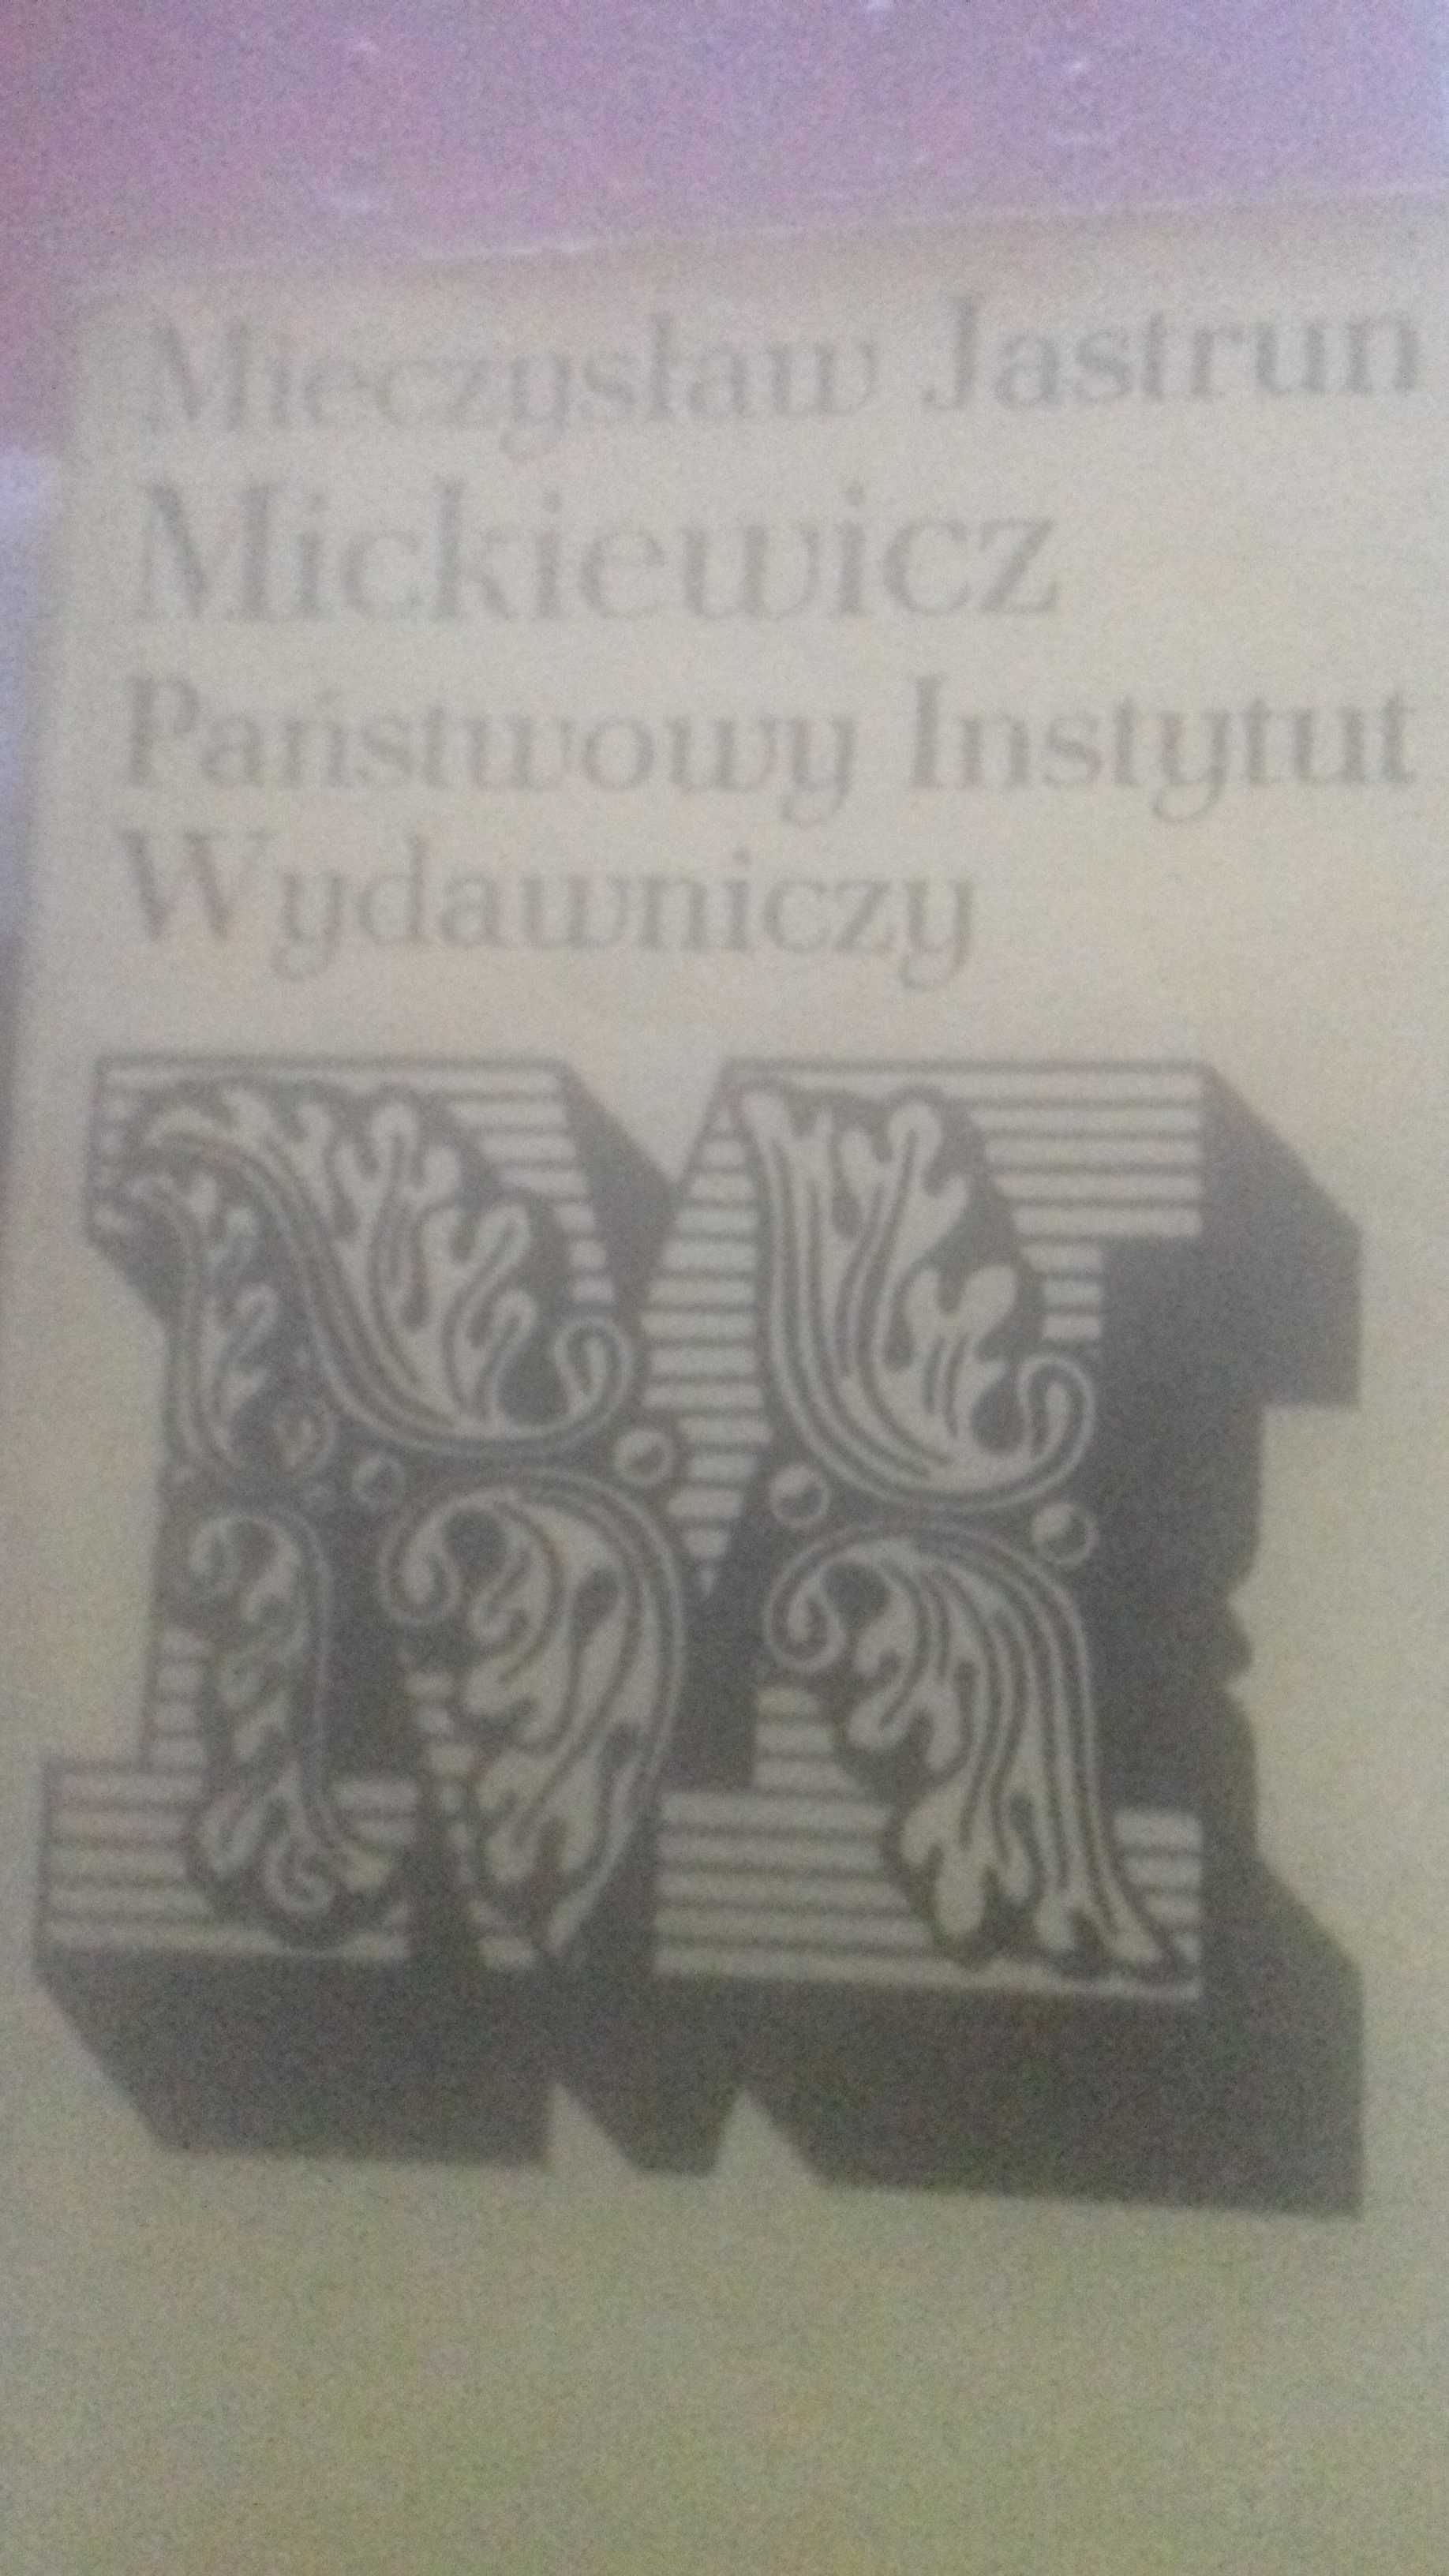 Mickiewicz.  M.Jastrun. PIW 1974